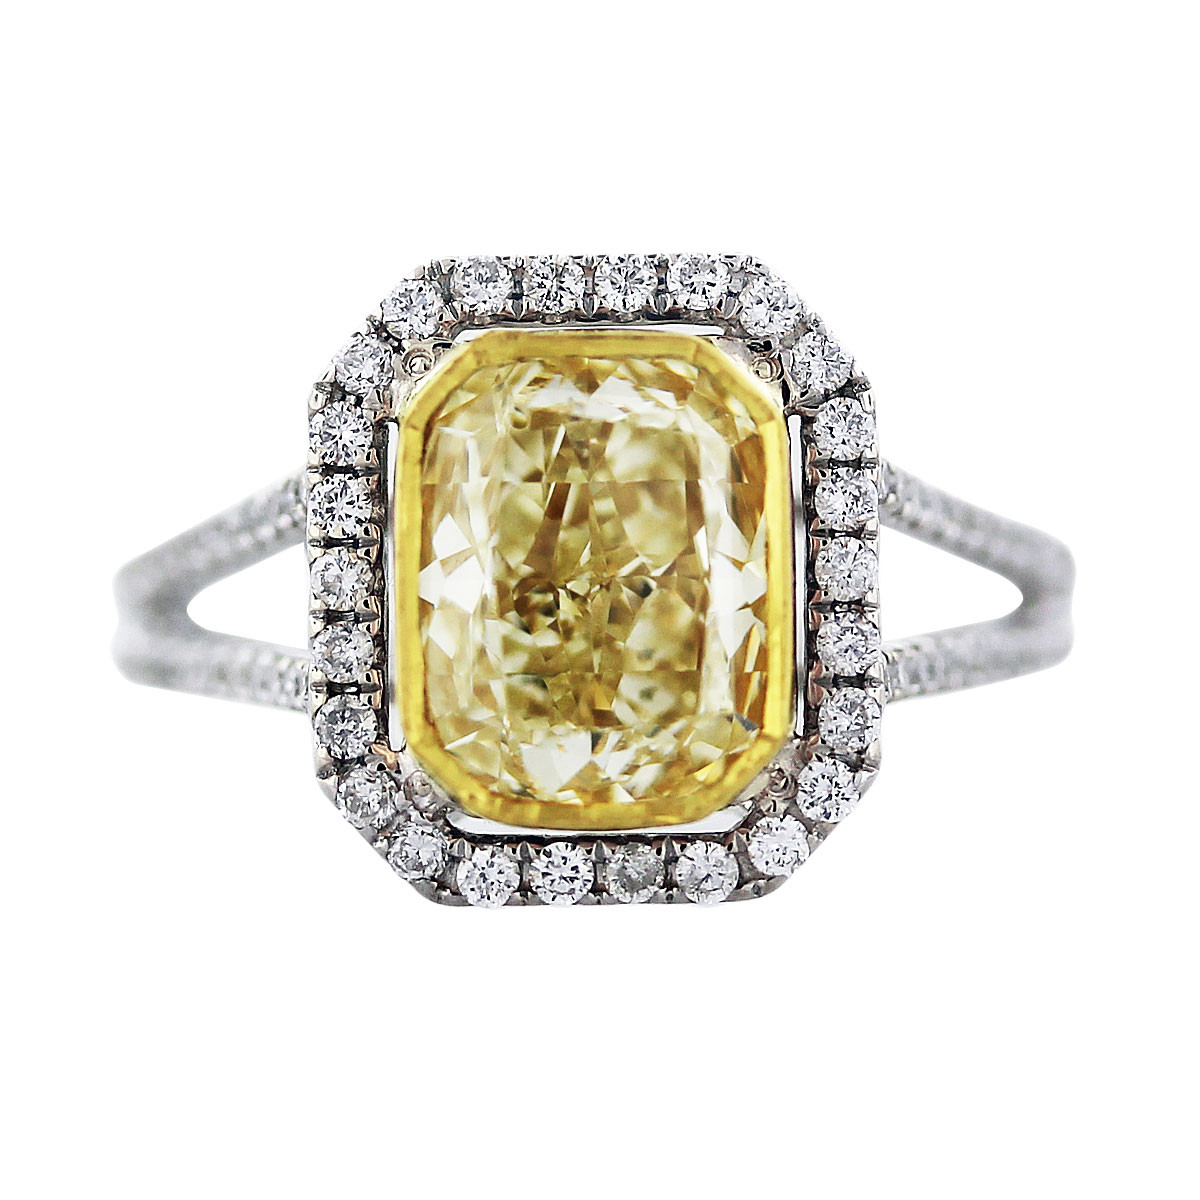 Yellow Diamond Wedding Ring
 Cushion Cut Fancy Yellow Diamond Engagement Ring in 18K